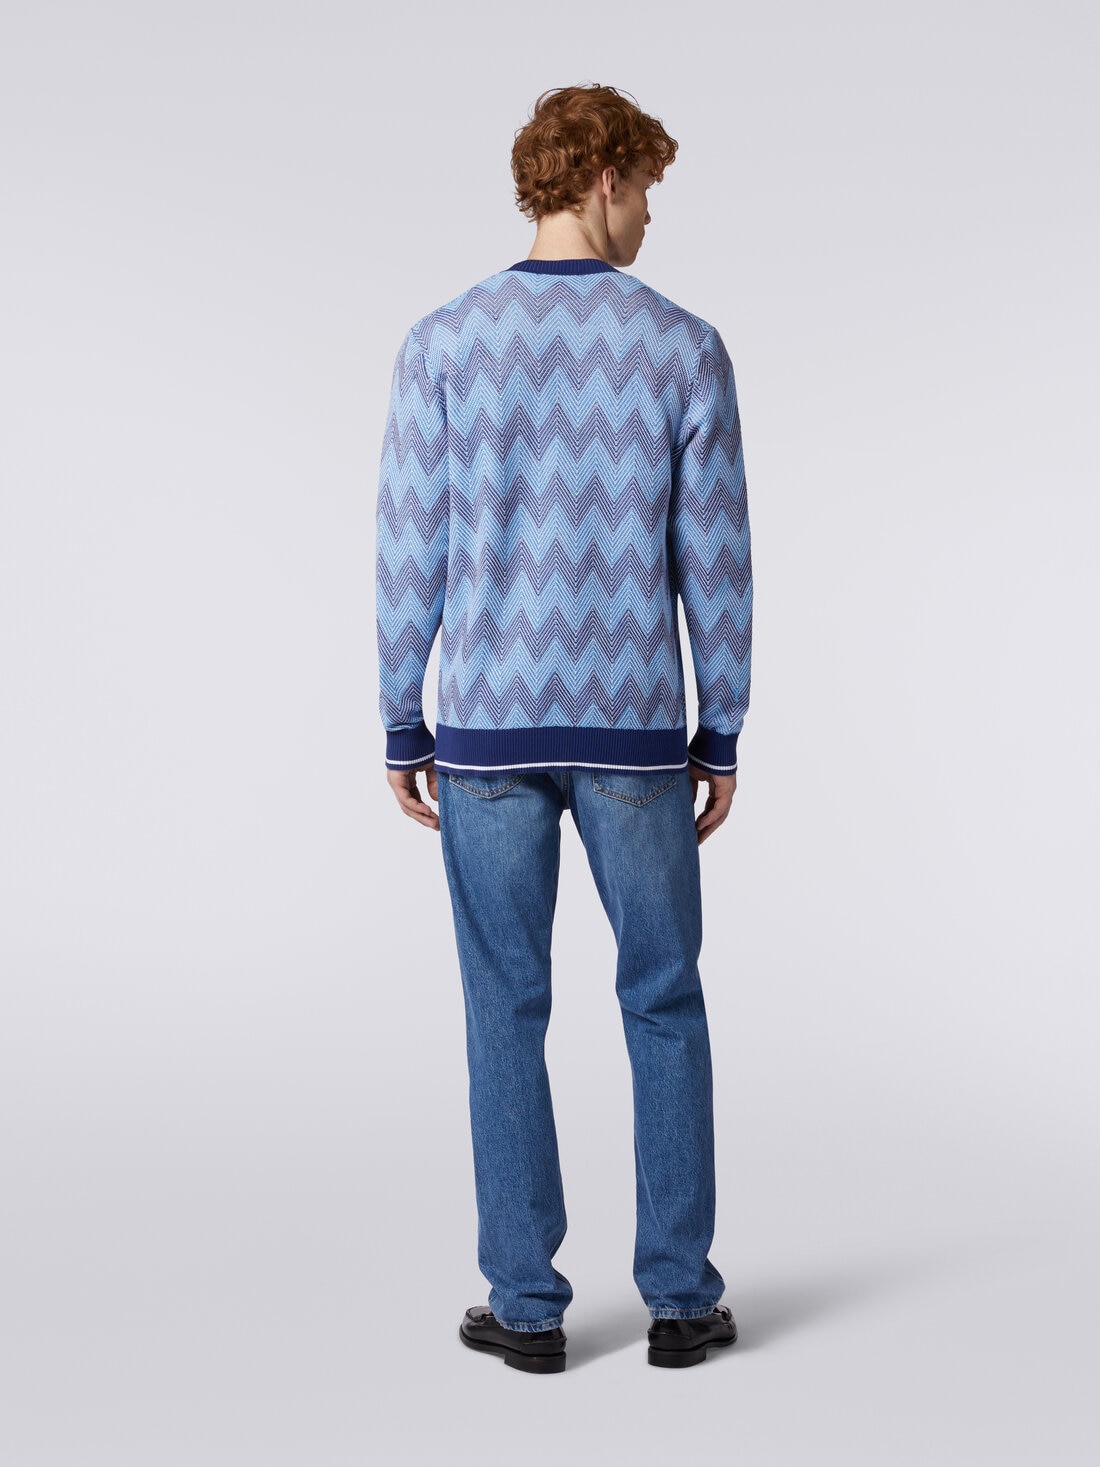 Cardigan in chevron cotton knit with contrasting trim, Blue - US24SM07BK034YS72F8 - 3